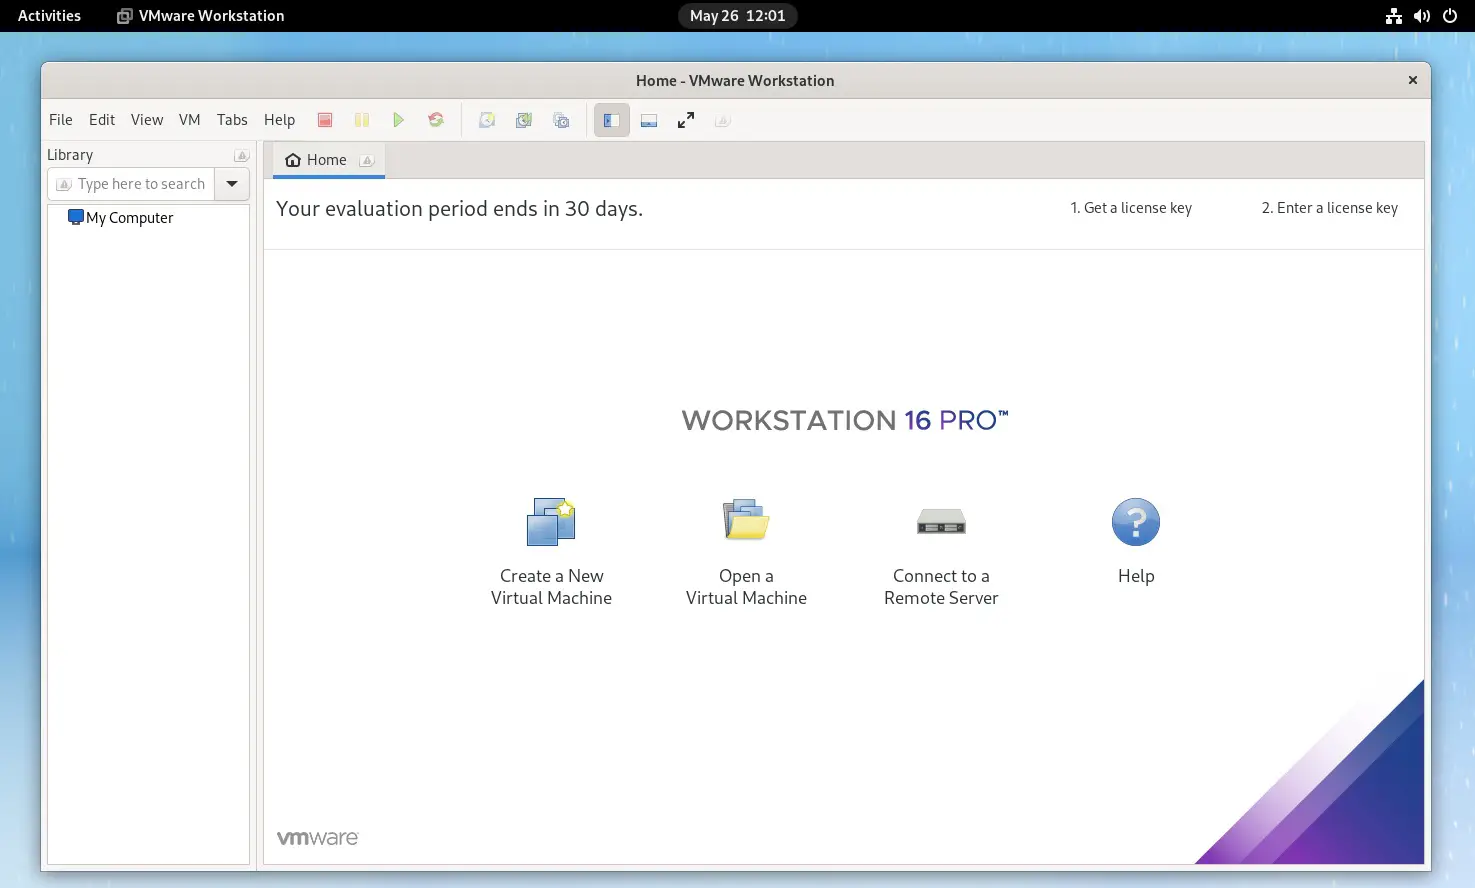 VMware Workstation Pro Running on Fedora